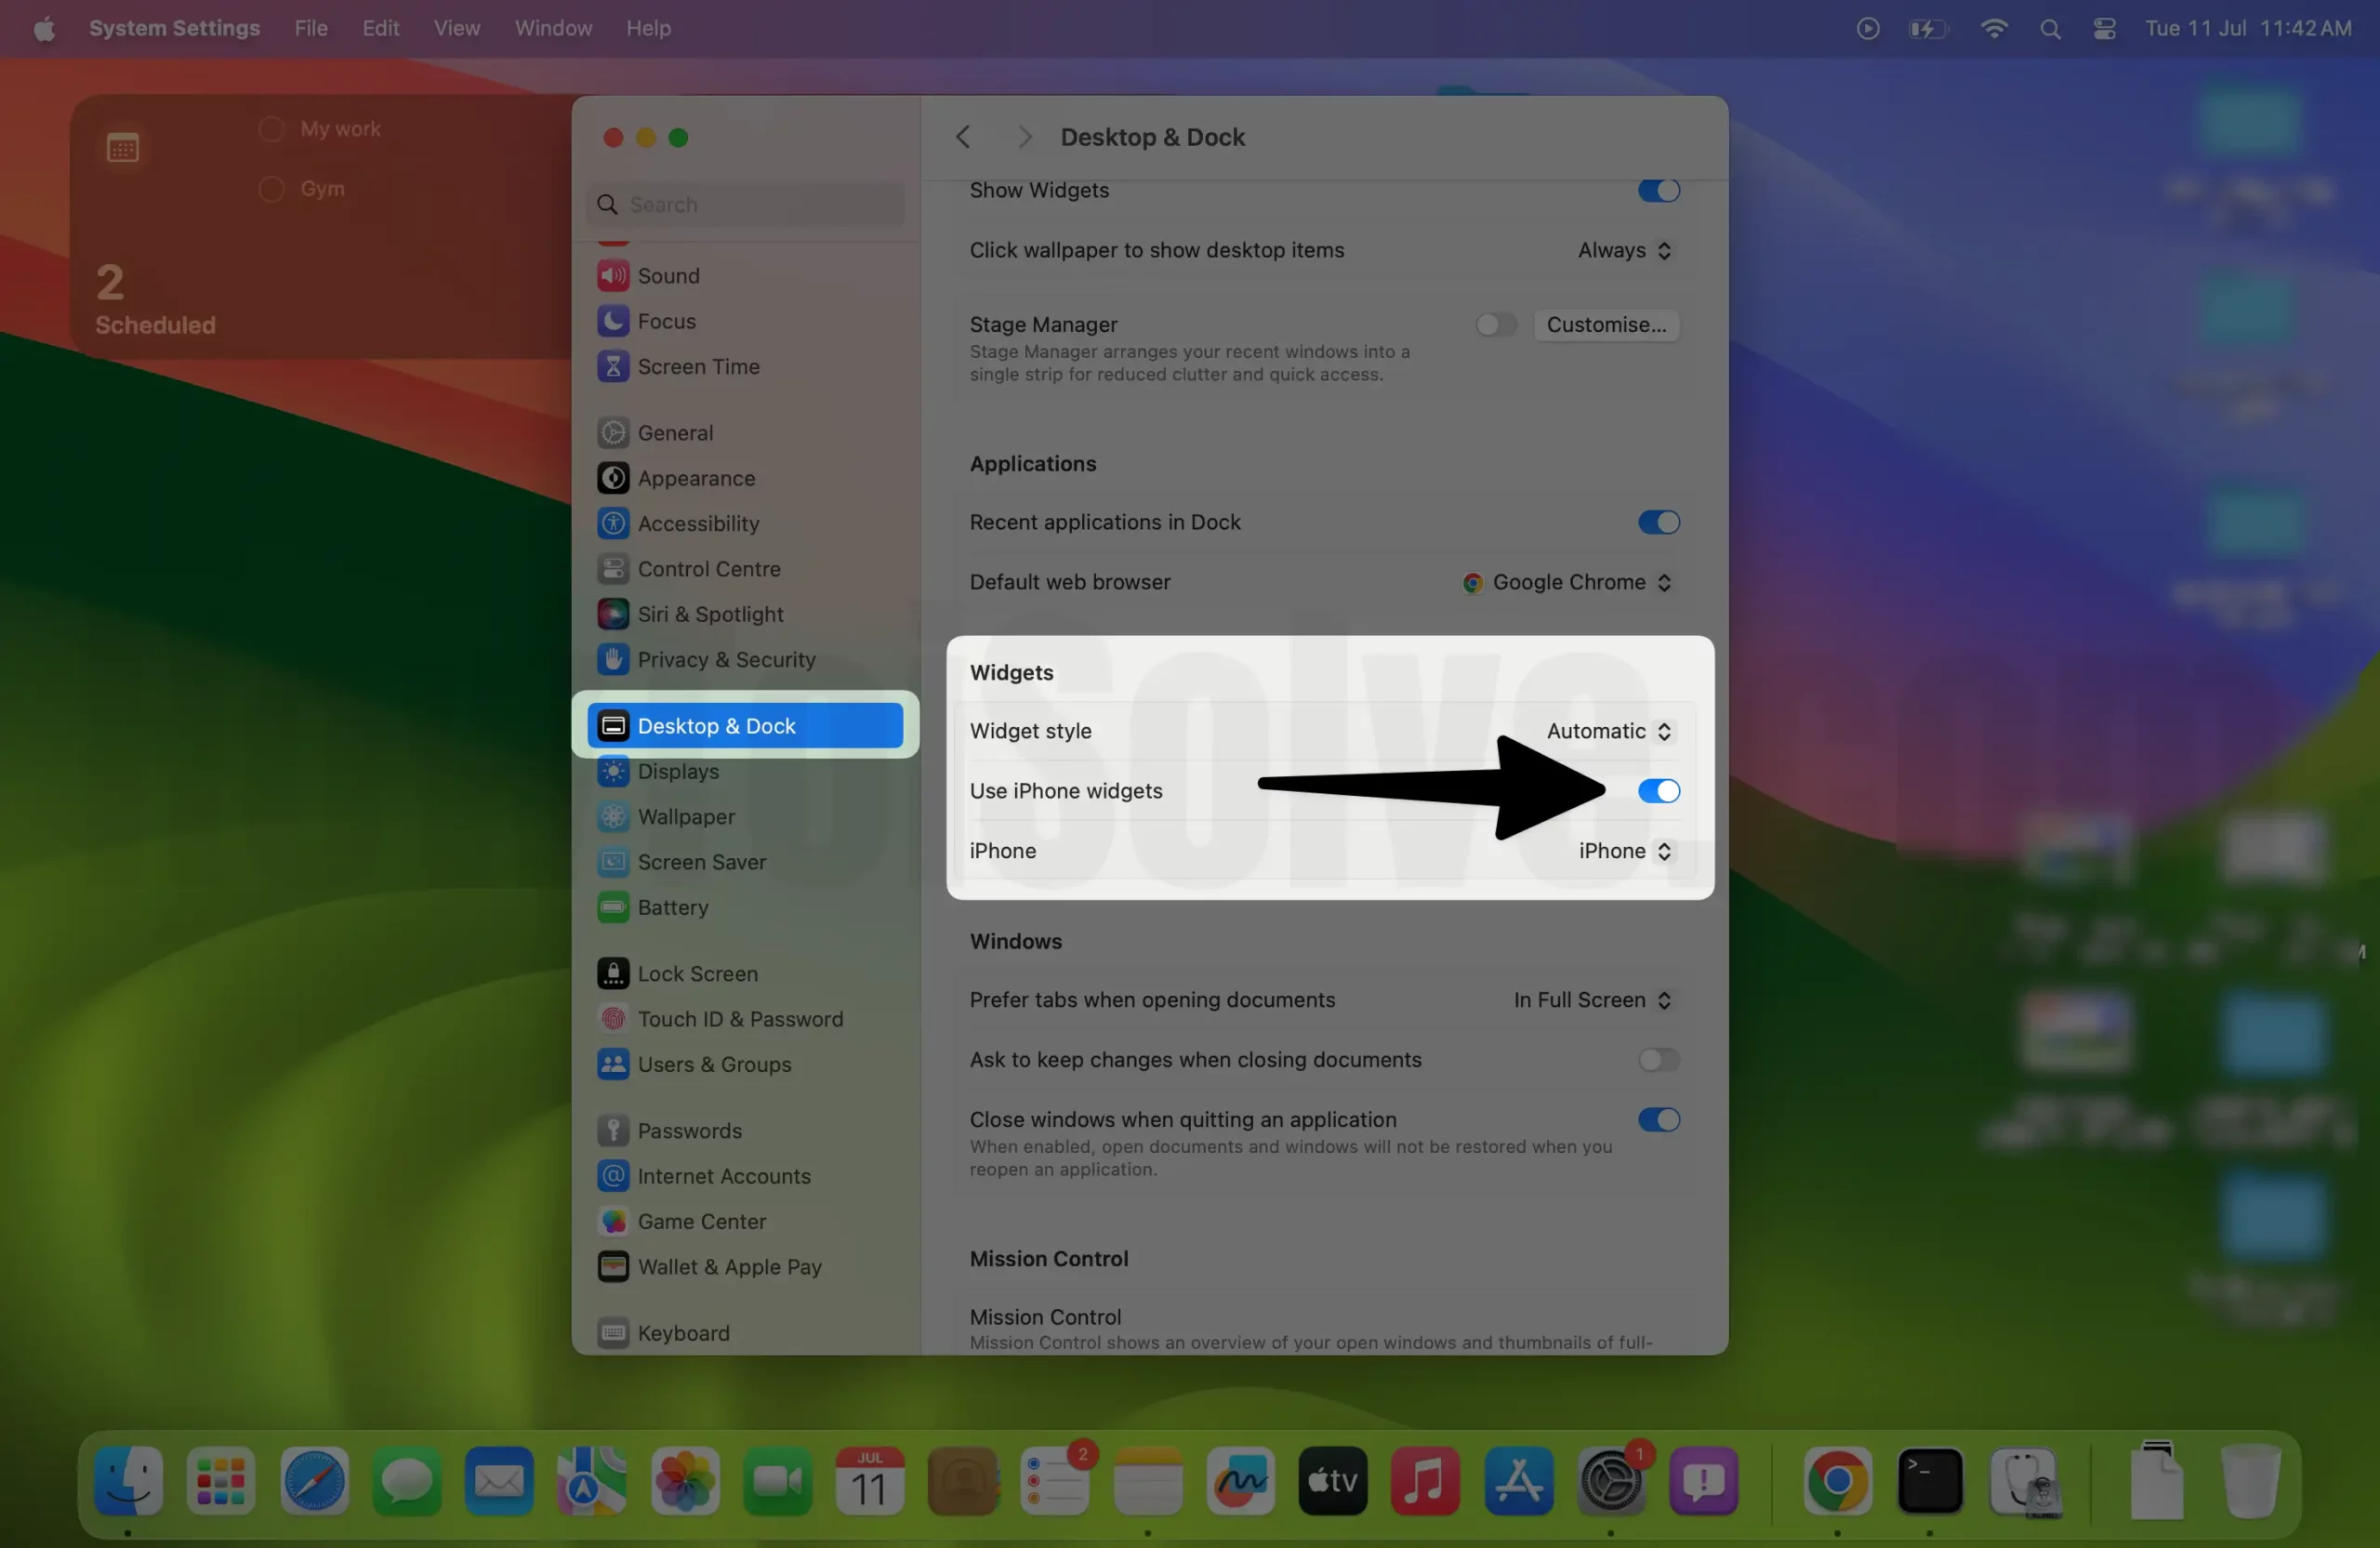 Enable Use iPhone widgets on Mac